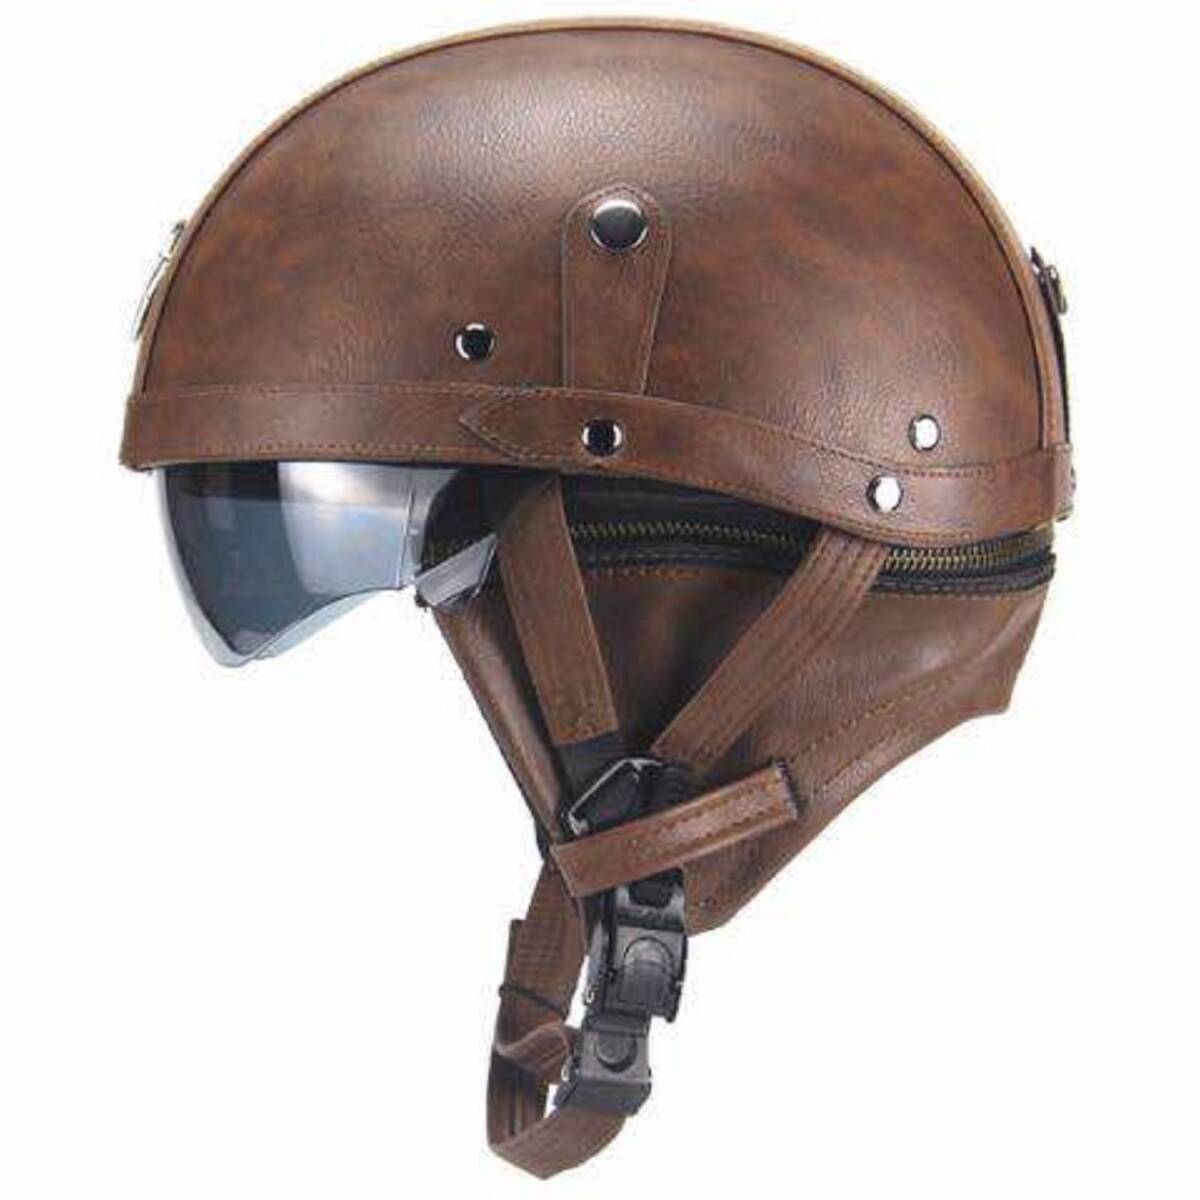  новый товар PU кожа Vintage Harley шлем мотоцикл semi-cap шлем защитные очки S~XL размер Brown размер :XL